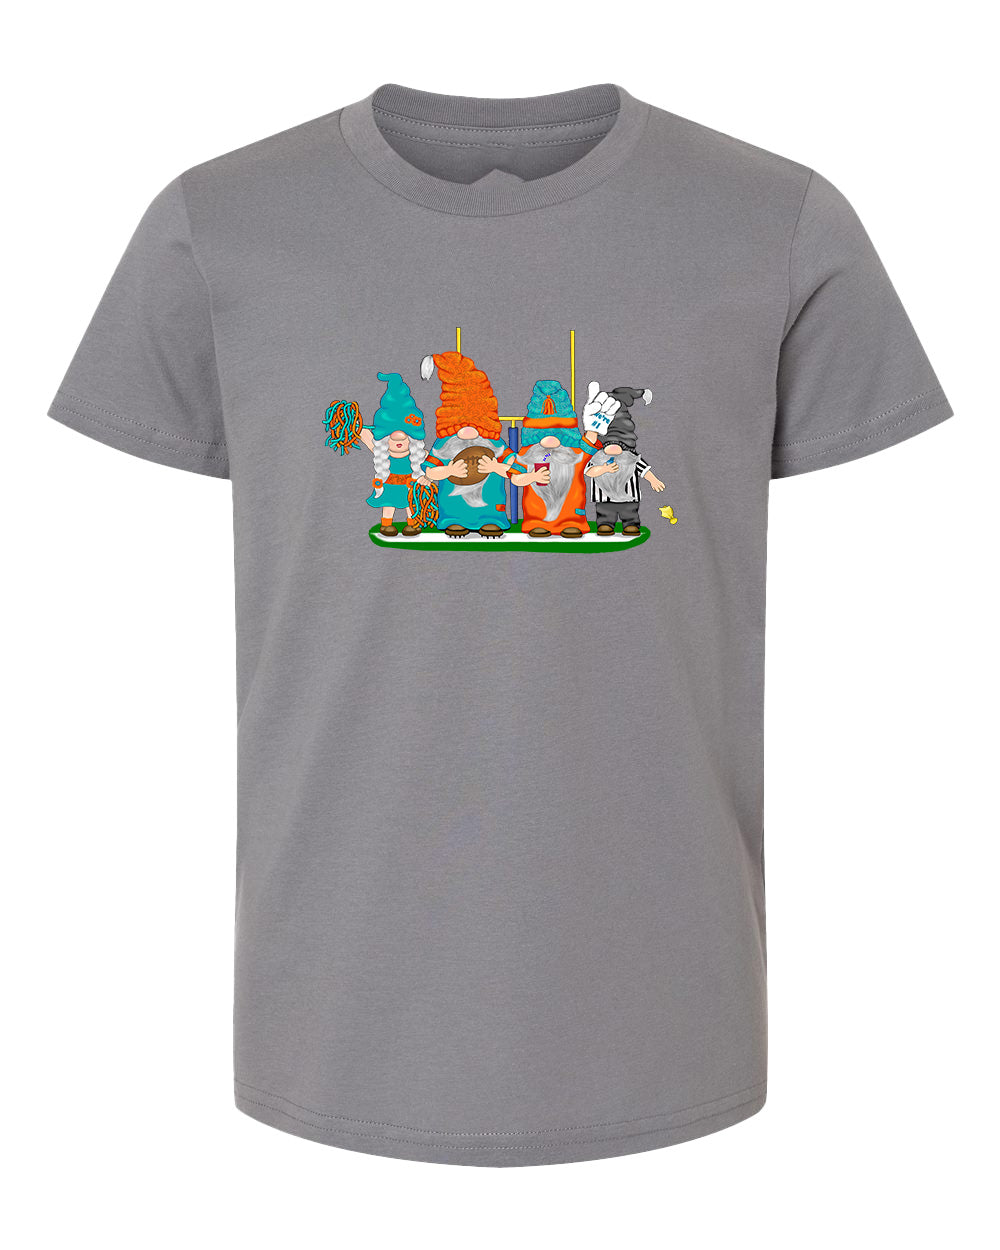 Aqua & Orange Football Gnomes  (similar to Miami) on Kids T-shirt